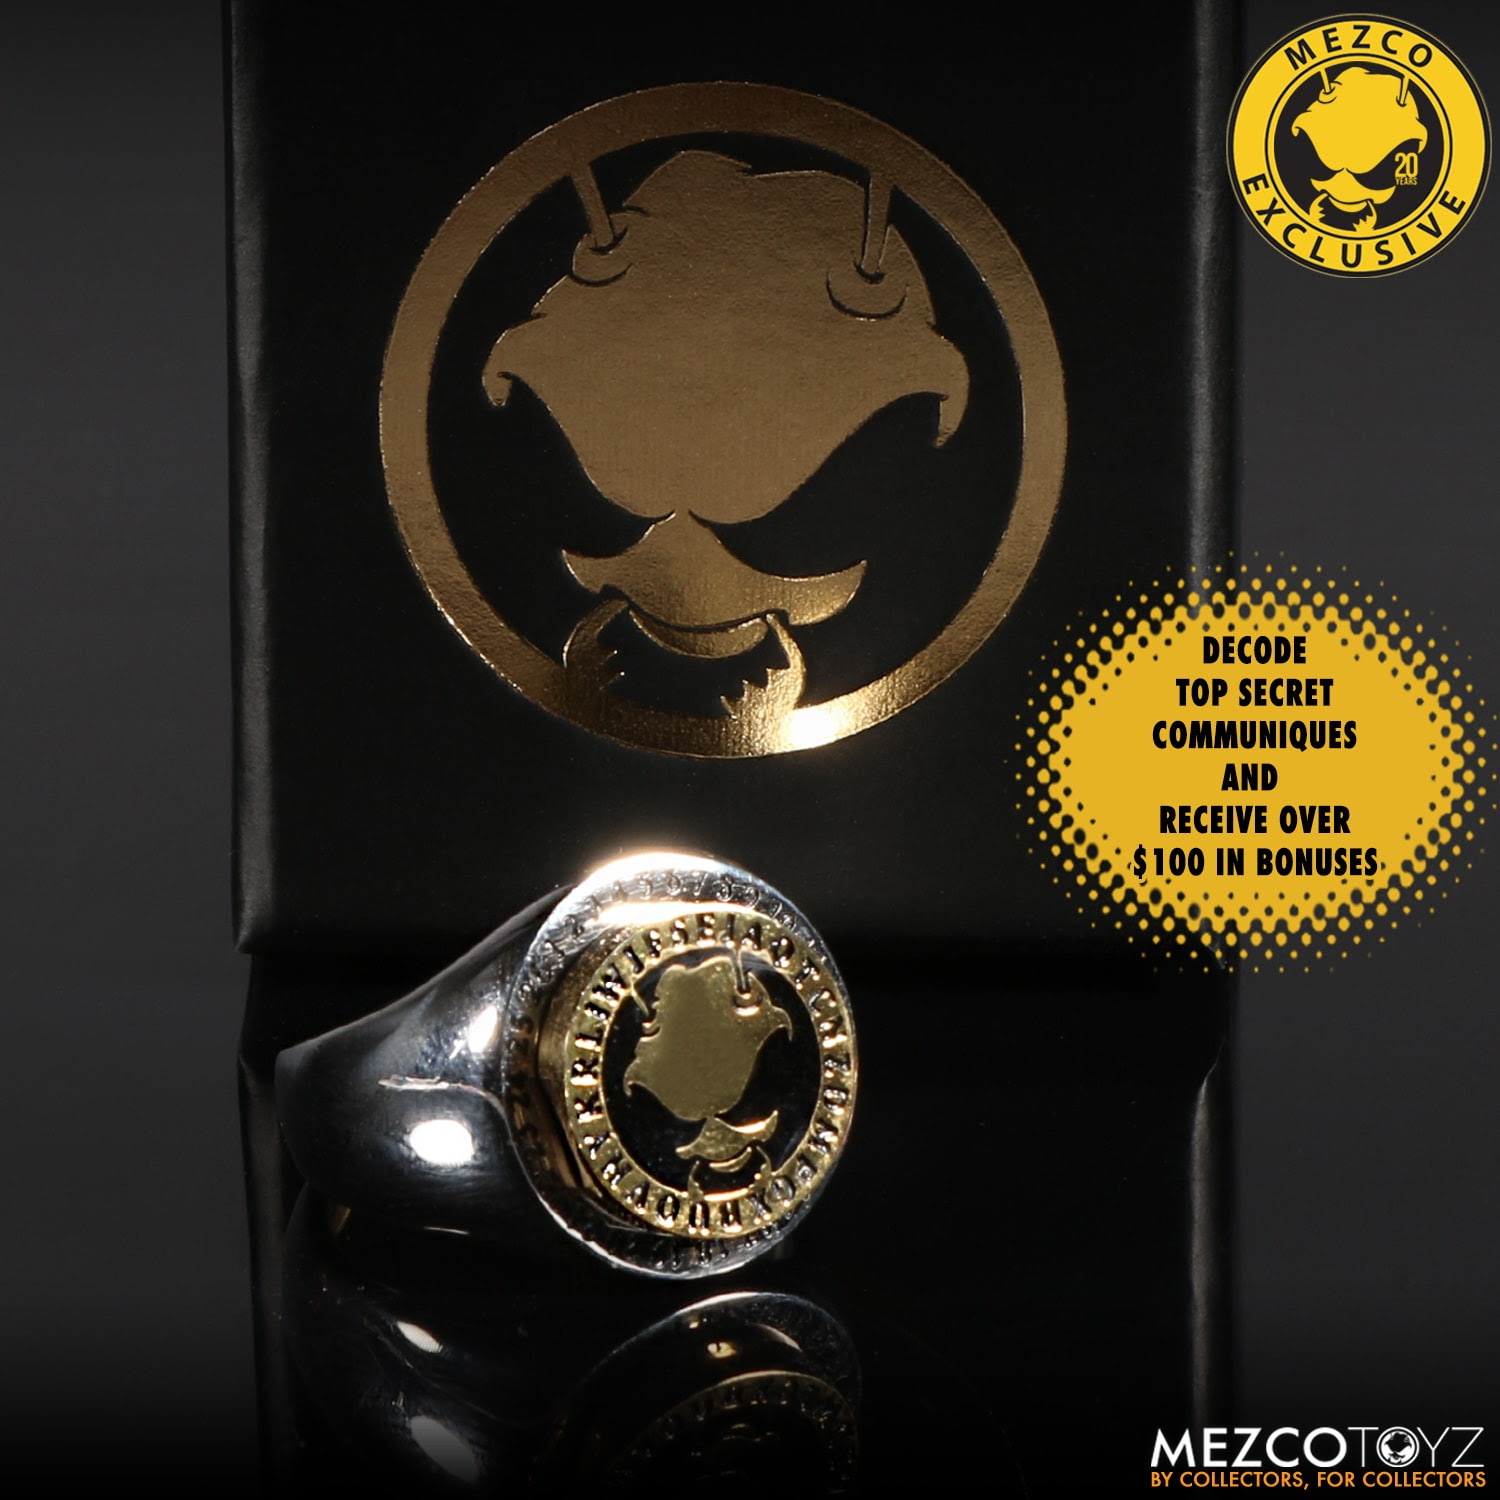 Mezco Secret Decoder Ring from Toy Fair 2020